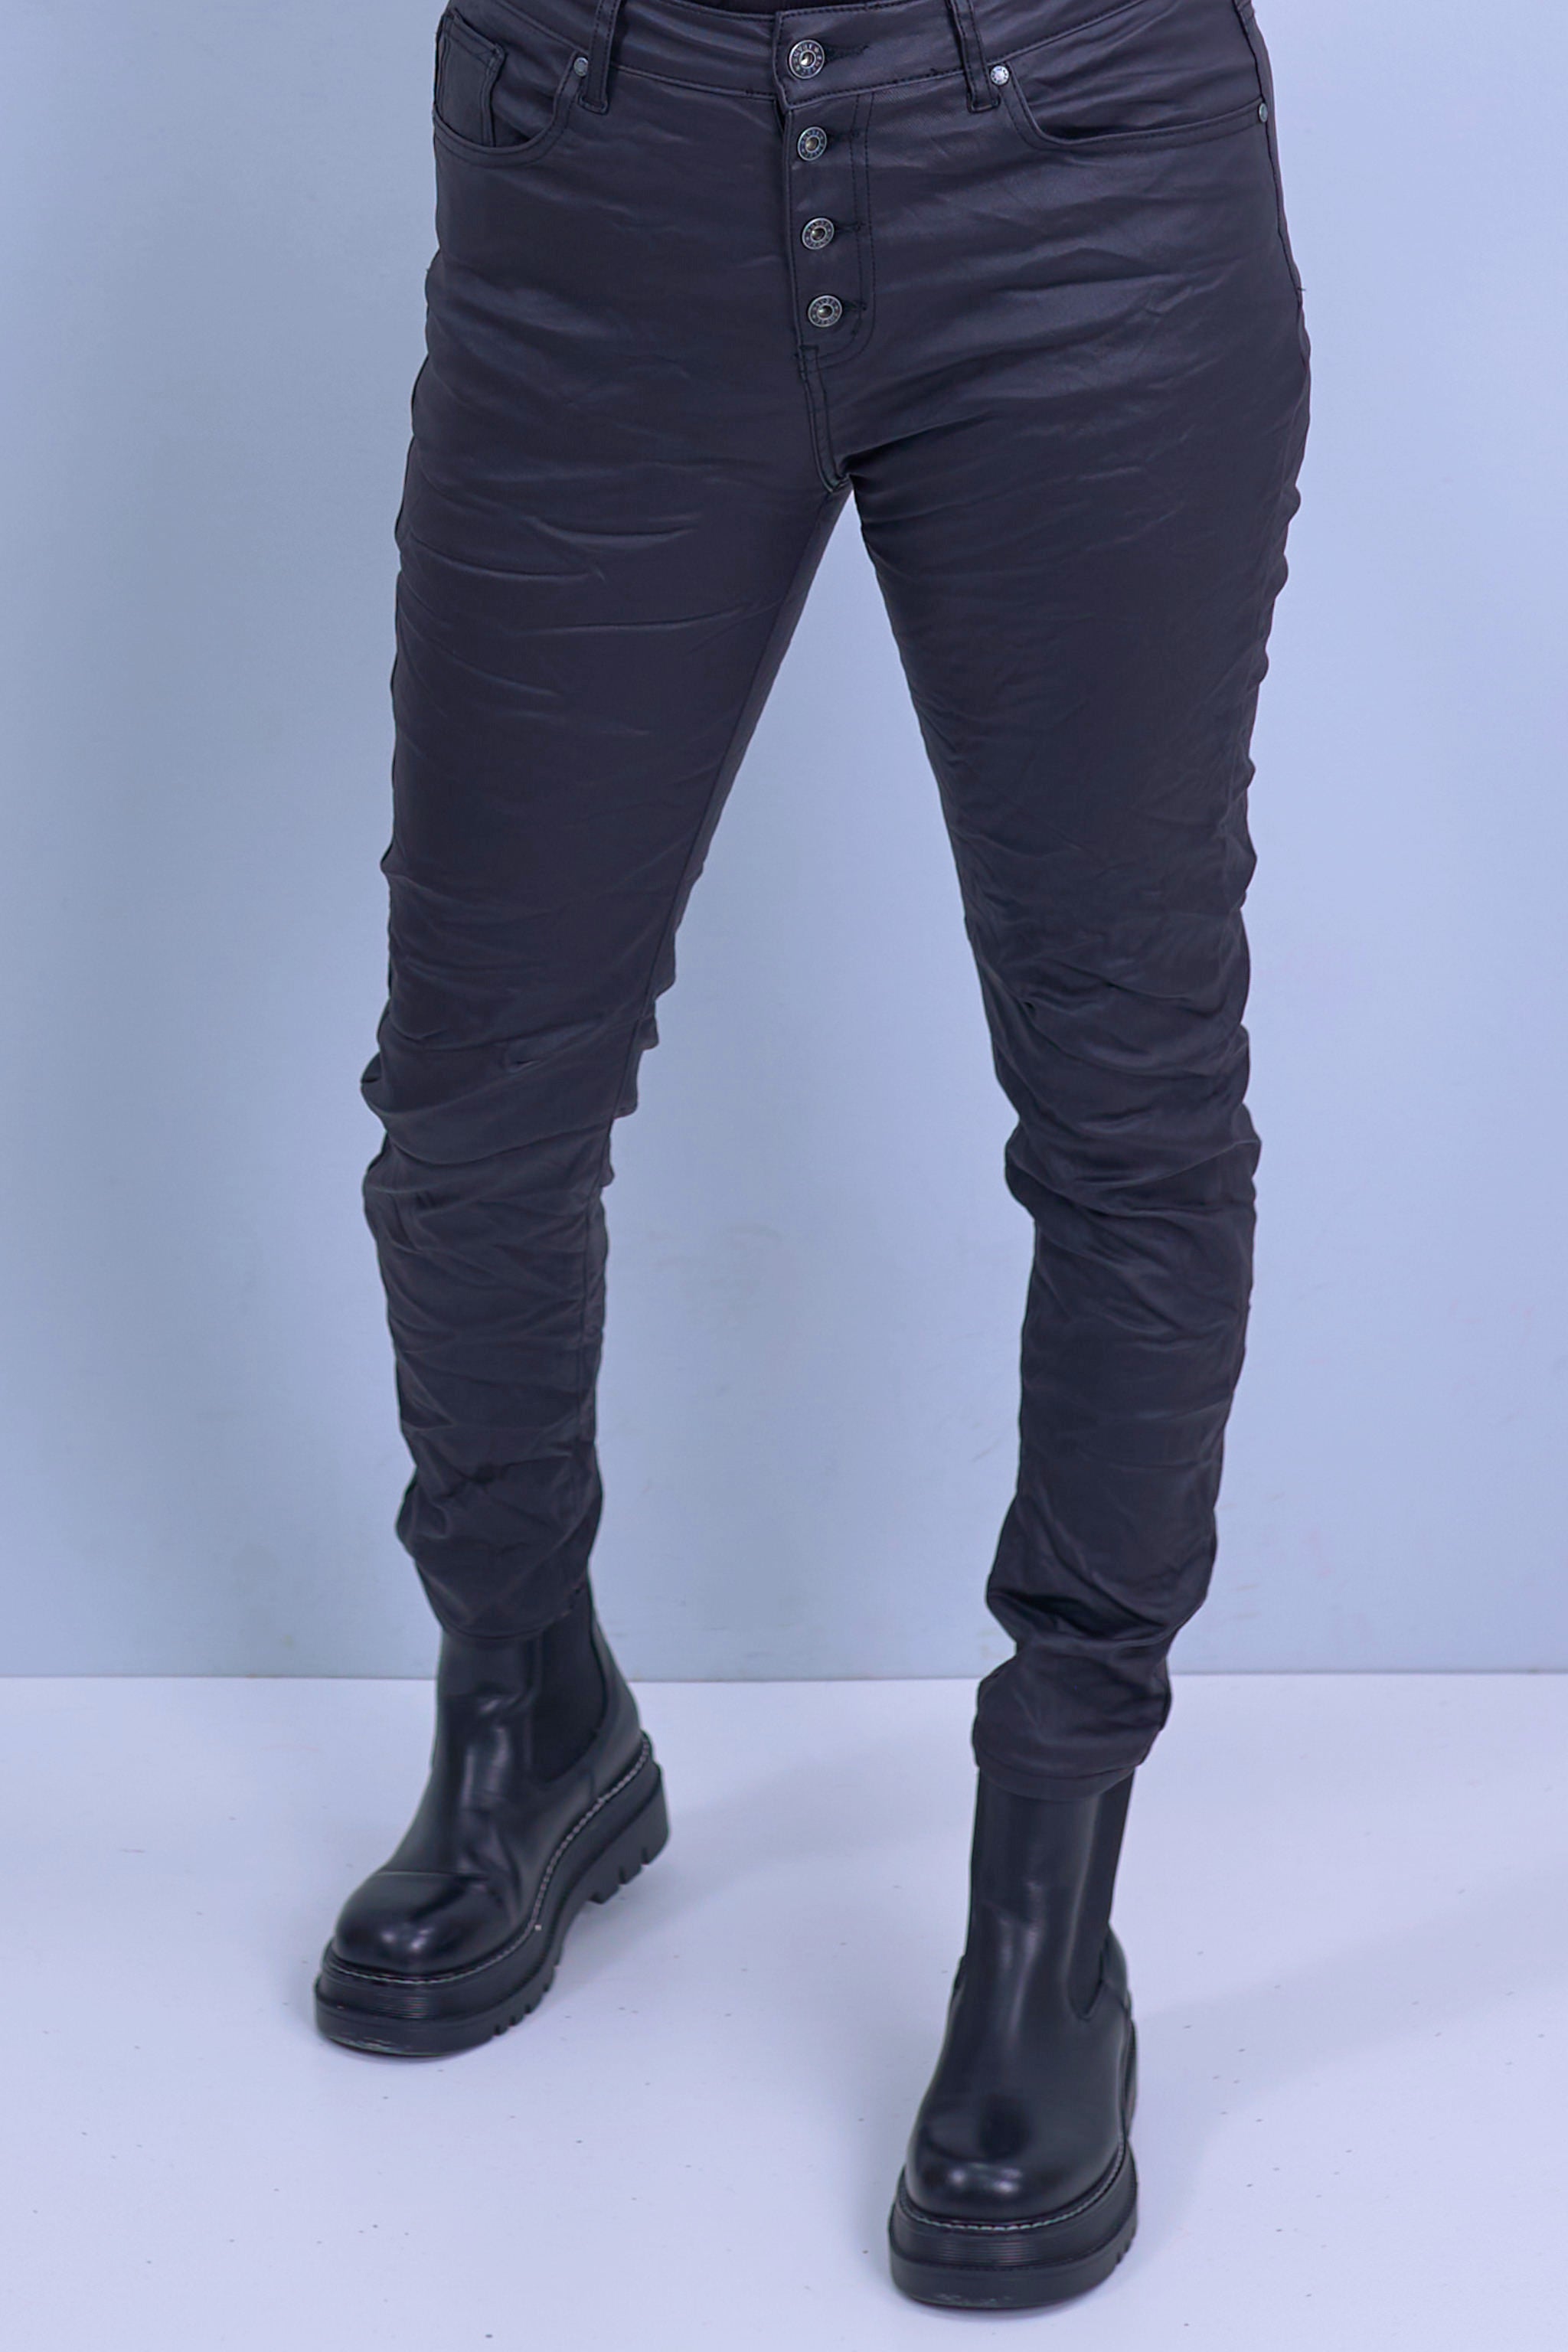 5-pocket style pants with coating, black